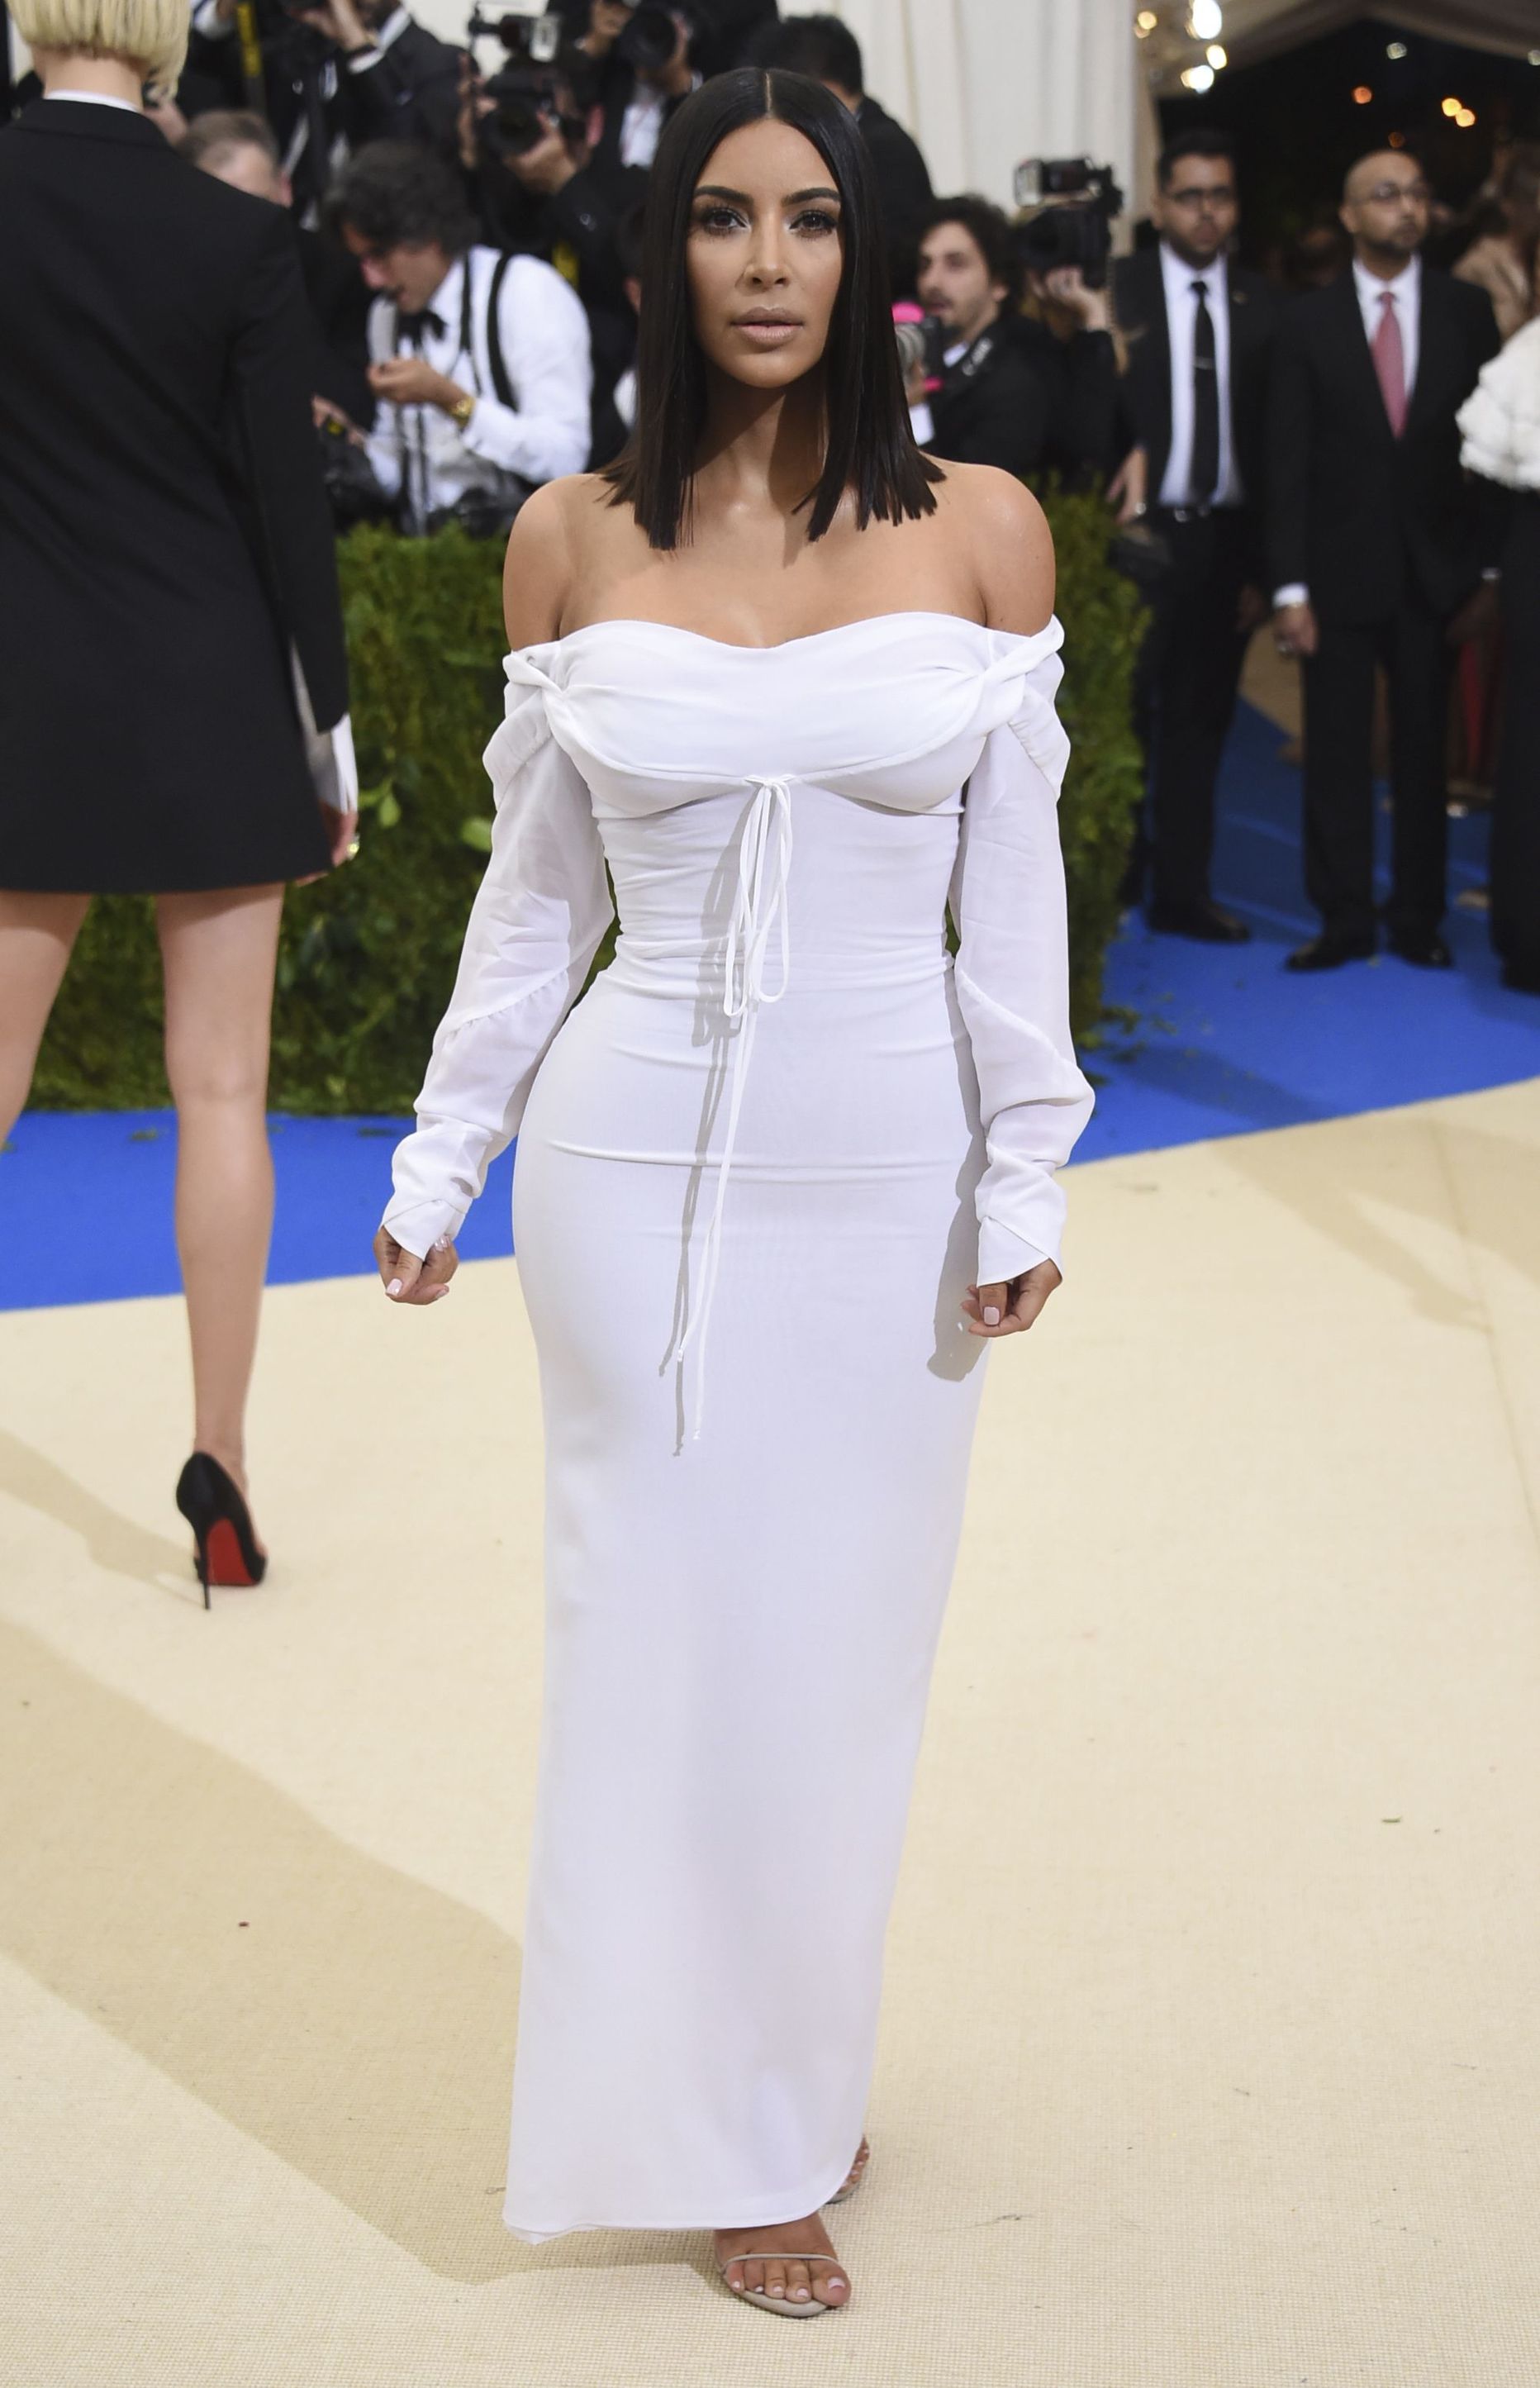 Kim Kardashian attends The Metropolitan Museum of Art's Costume Institute benefit gala celebrating the opening of the Rei Kawakubo/Comme des Garv